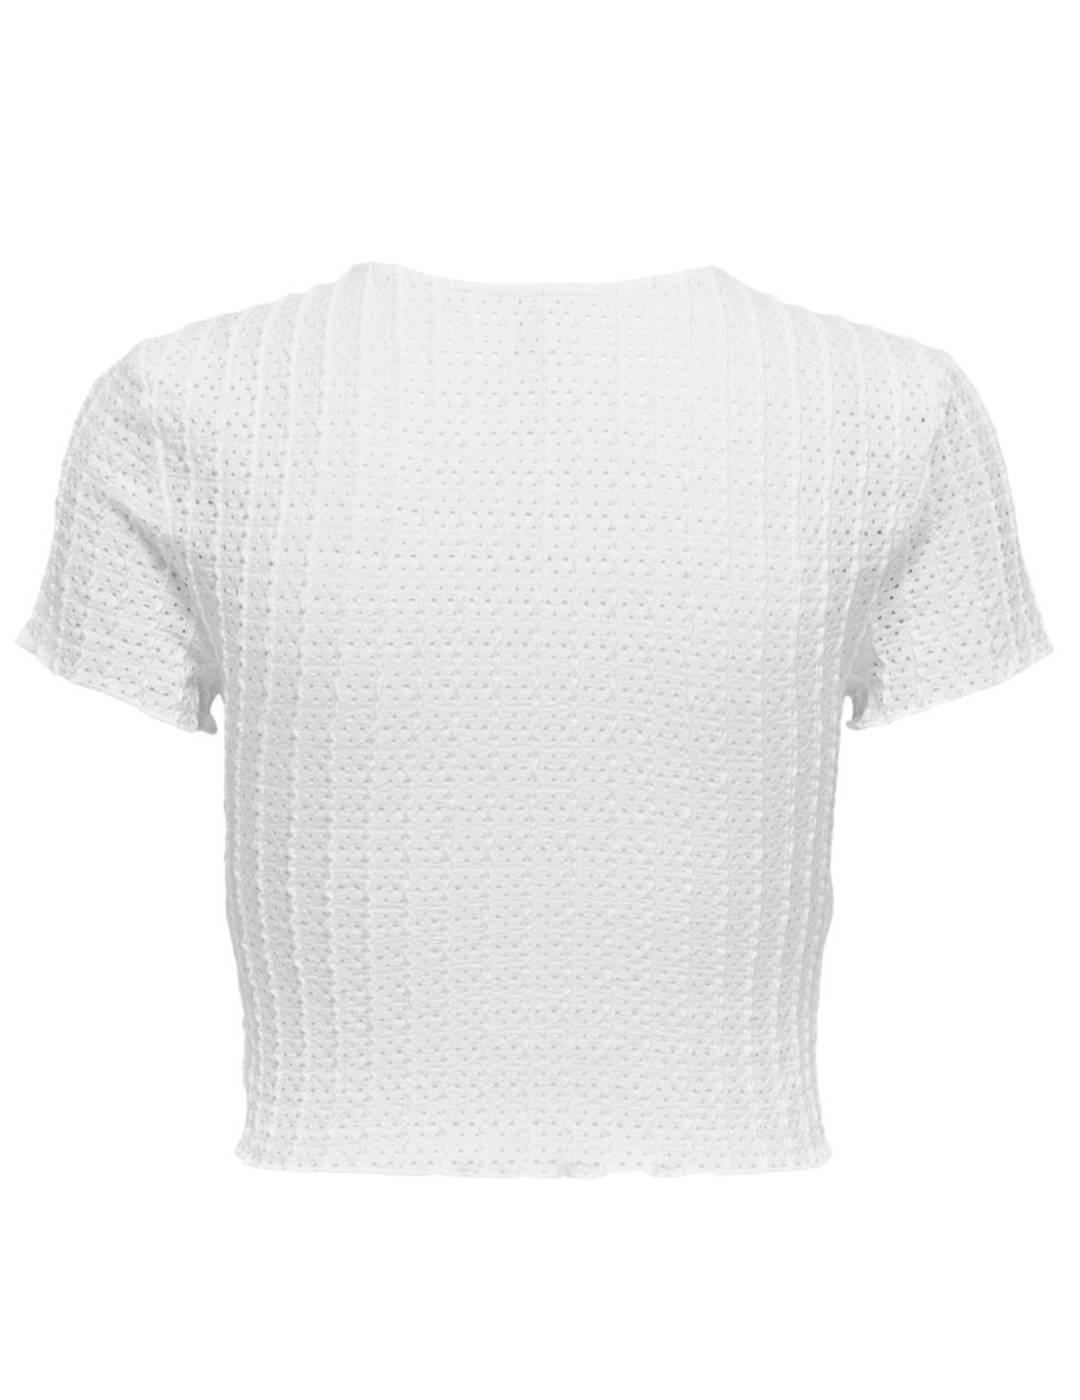 Camiseta Only Georgina crop blanco manga corta para mujer